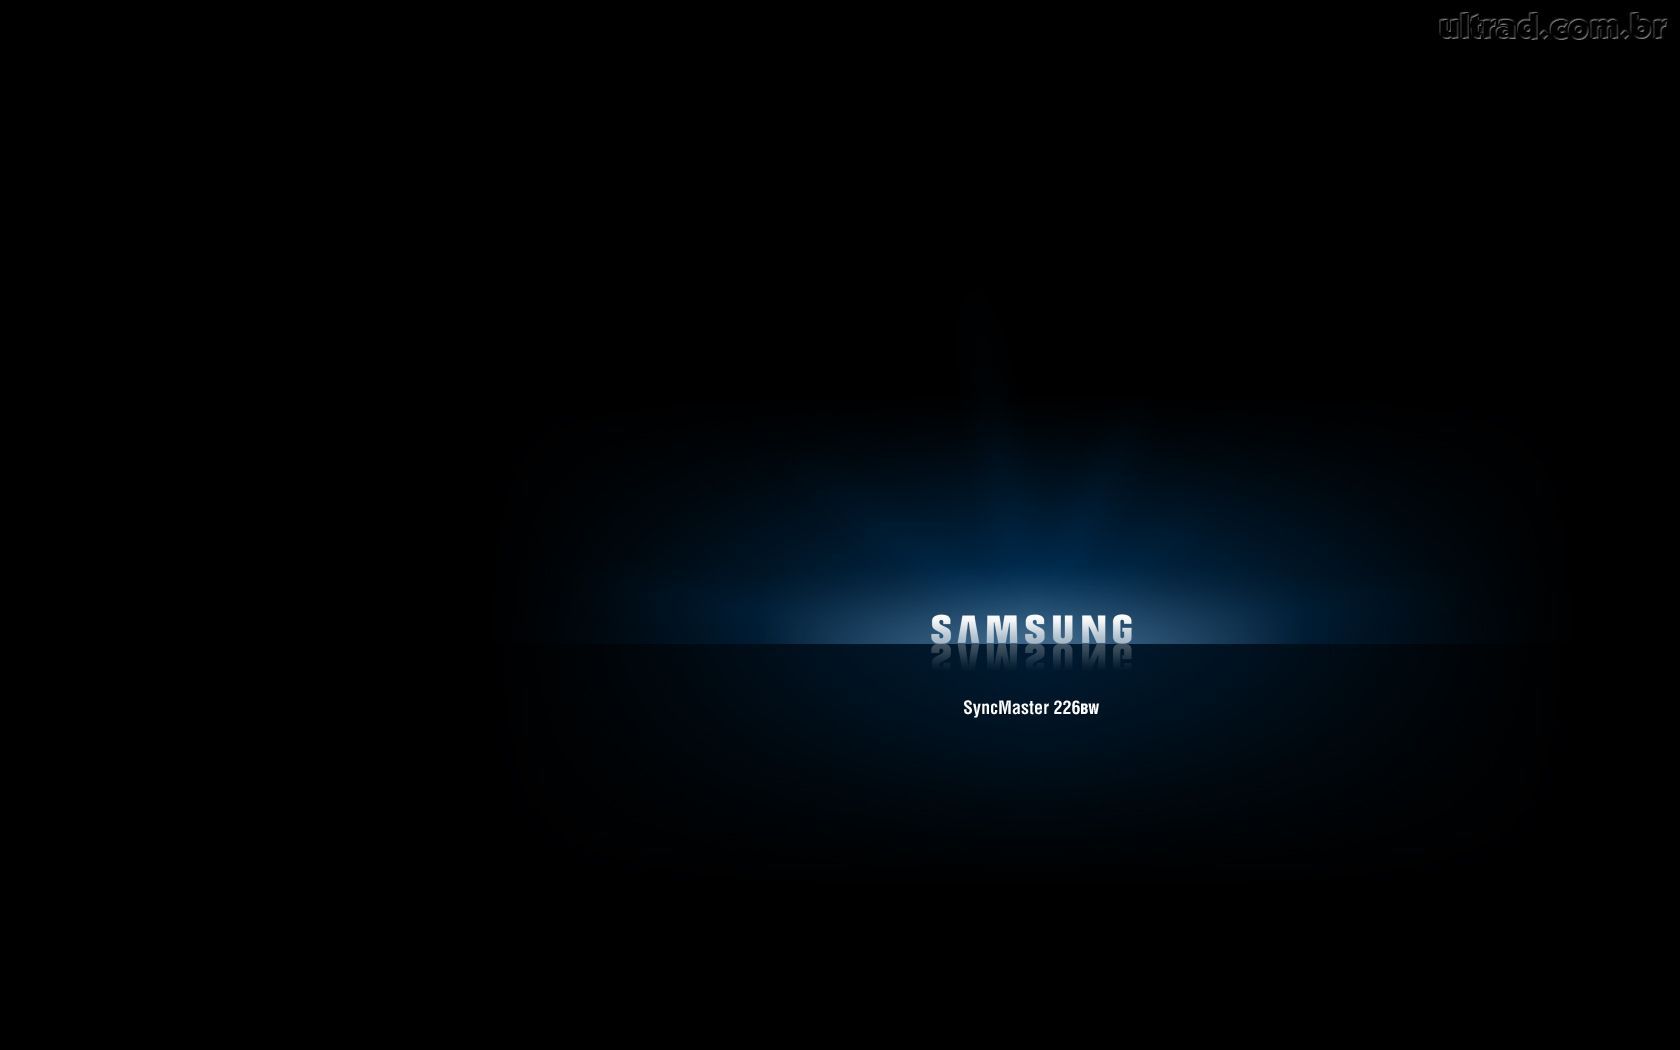 Samsung Logo Desktop HD Wallpapers - Wallpaper Cave